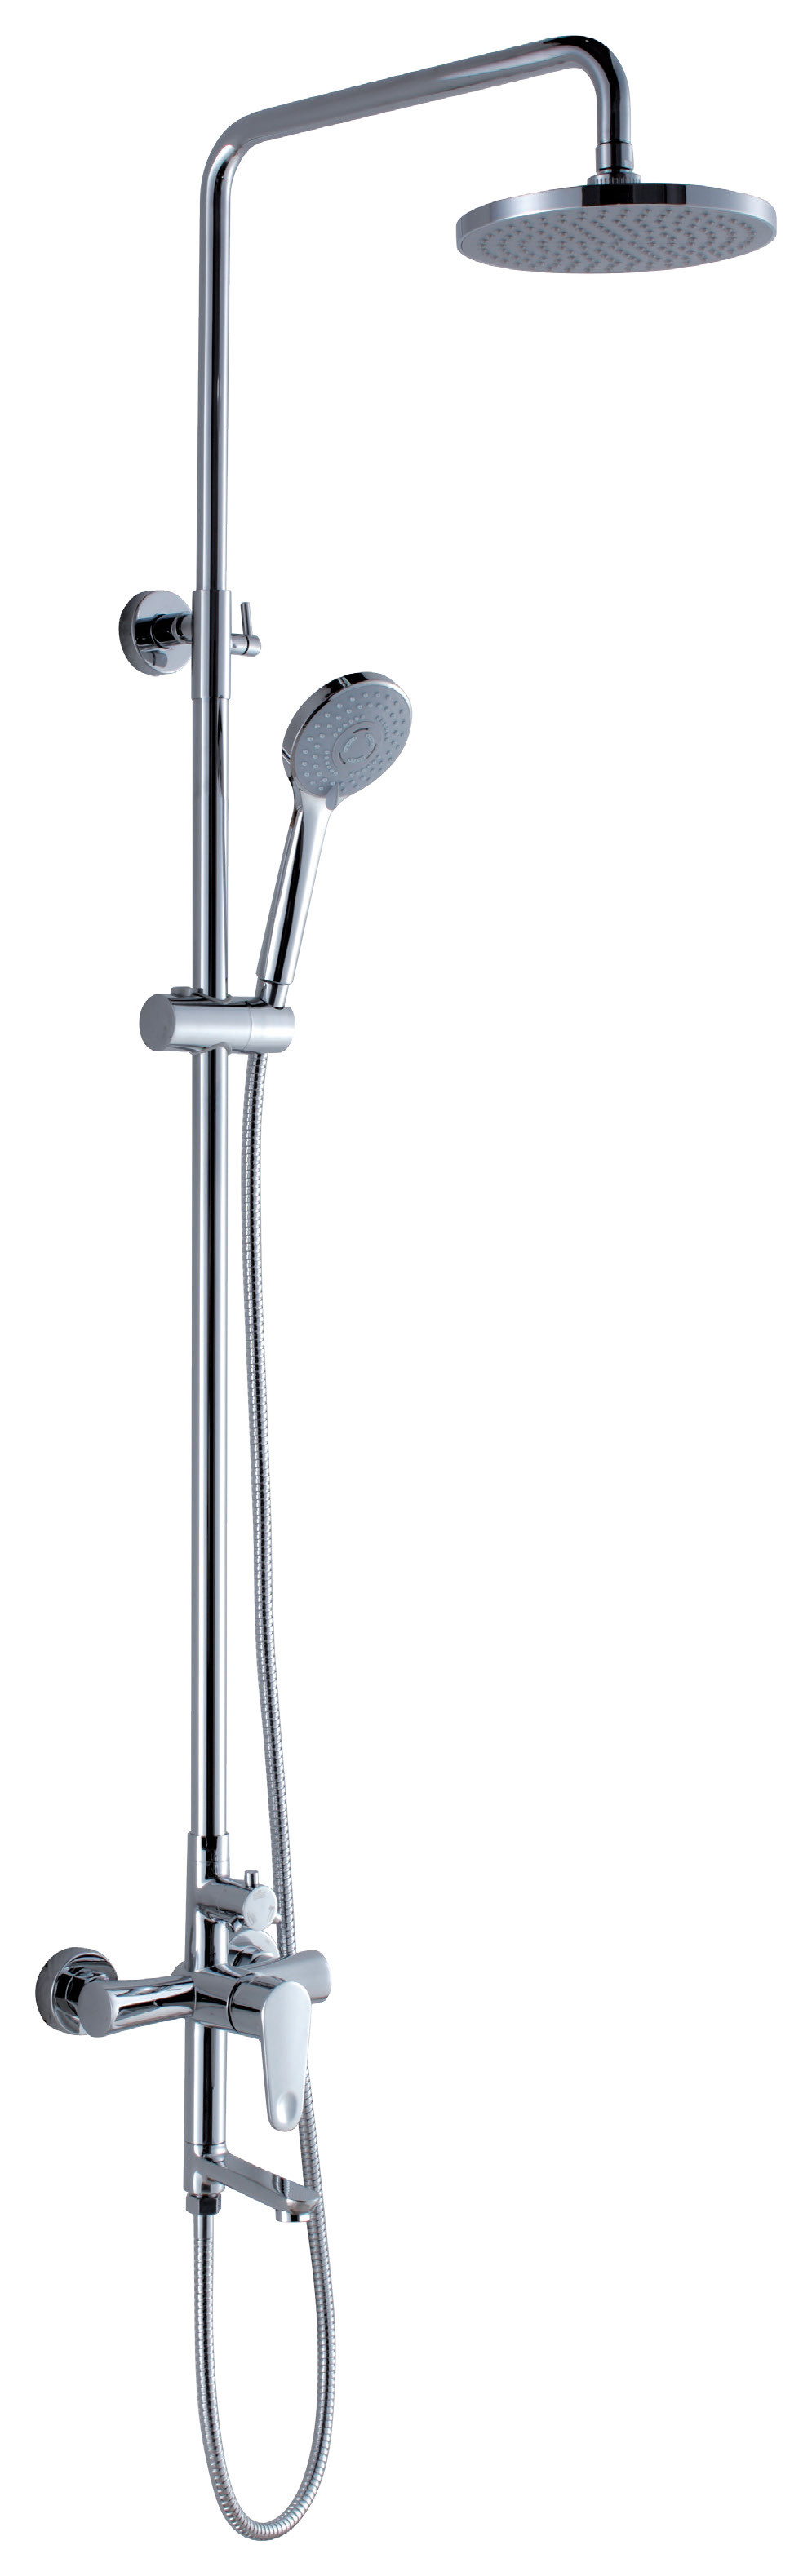  Modern Ceramic Single Handle Tub And Shower Faucet for Bathroom , 8um - 12um Manufactures